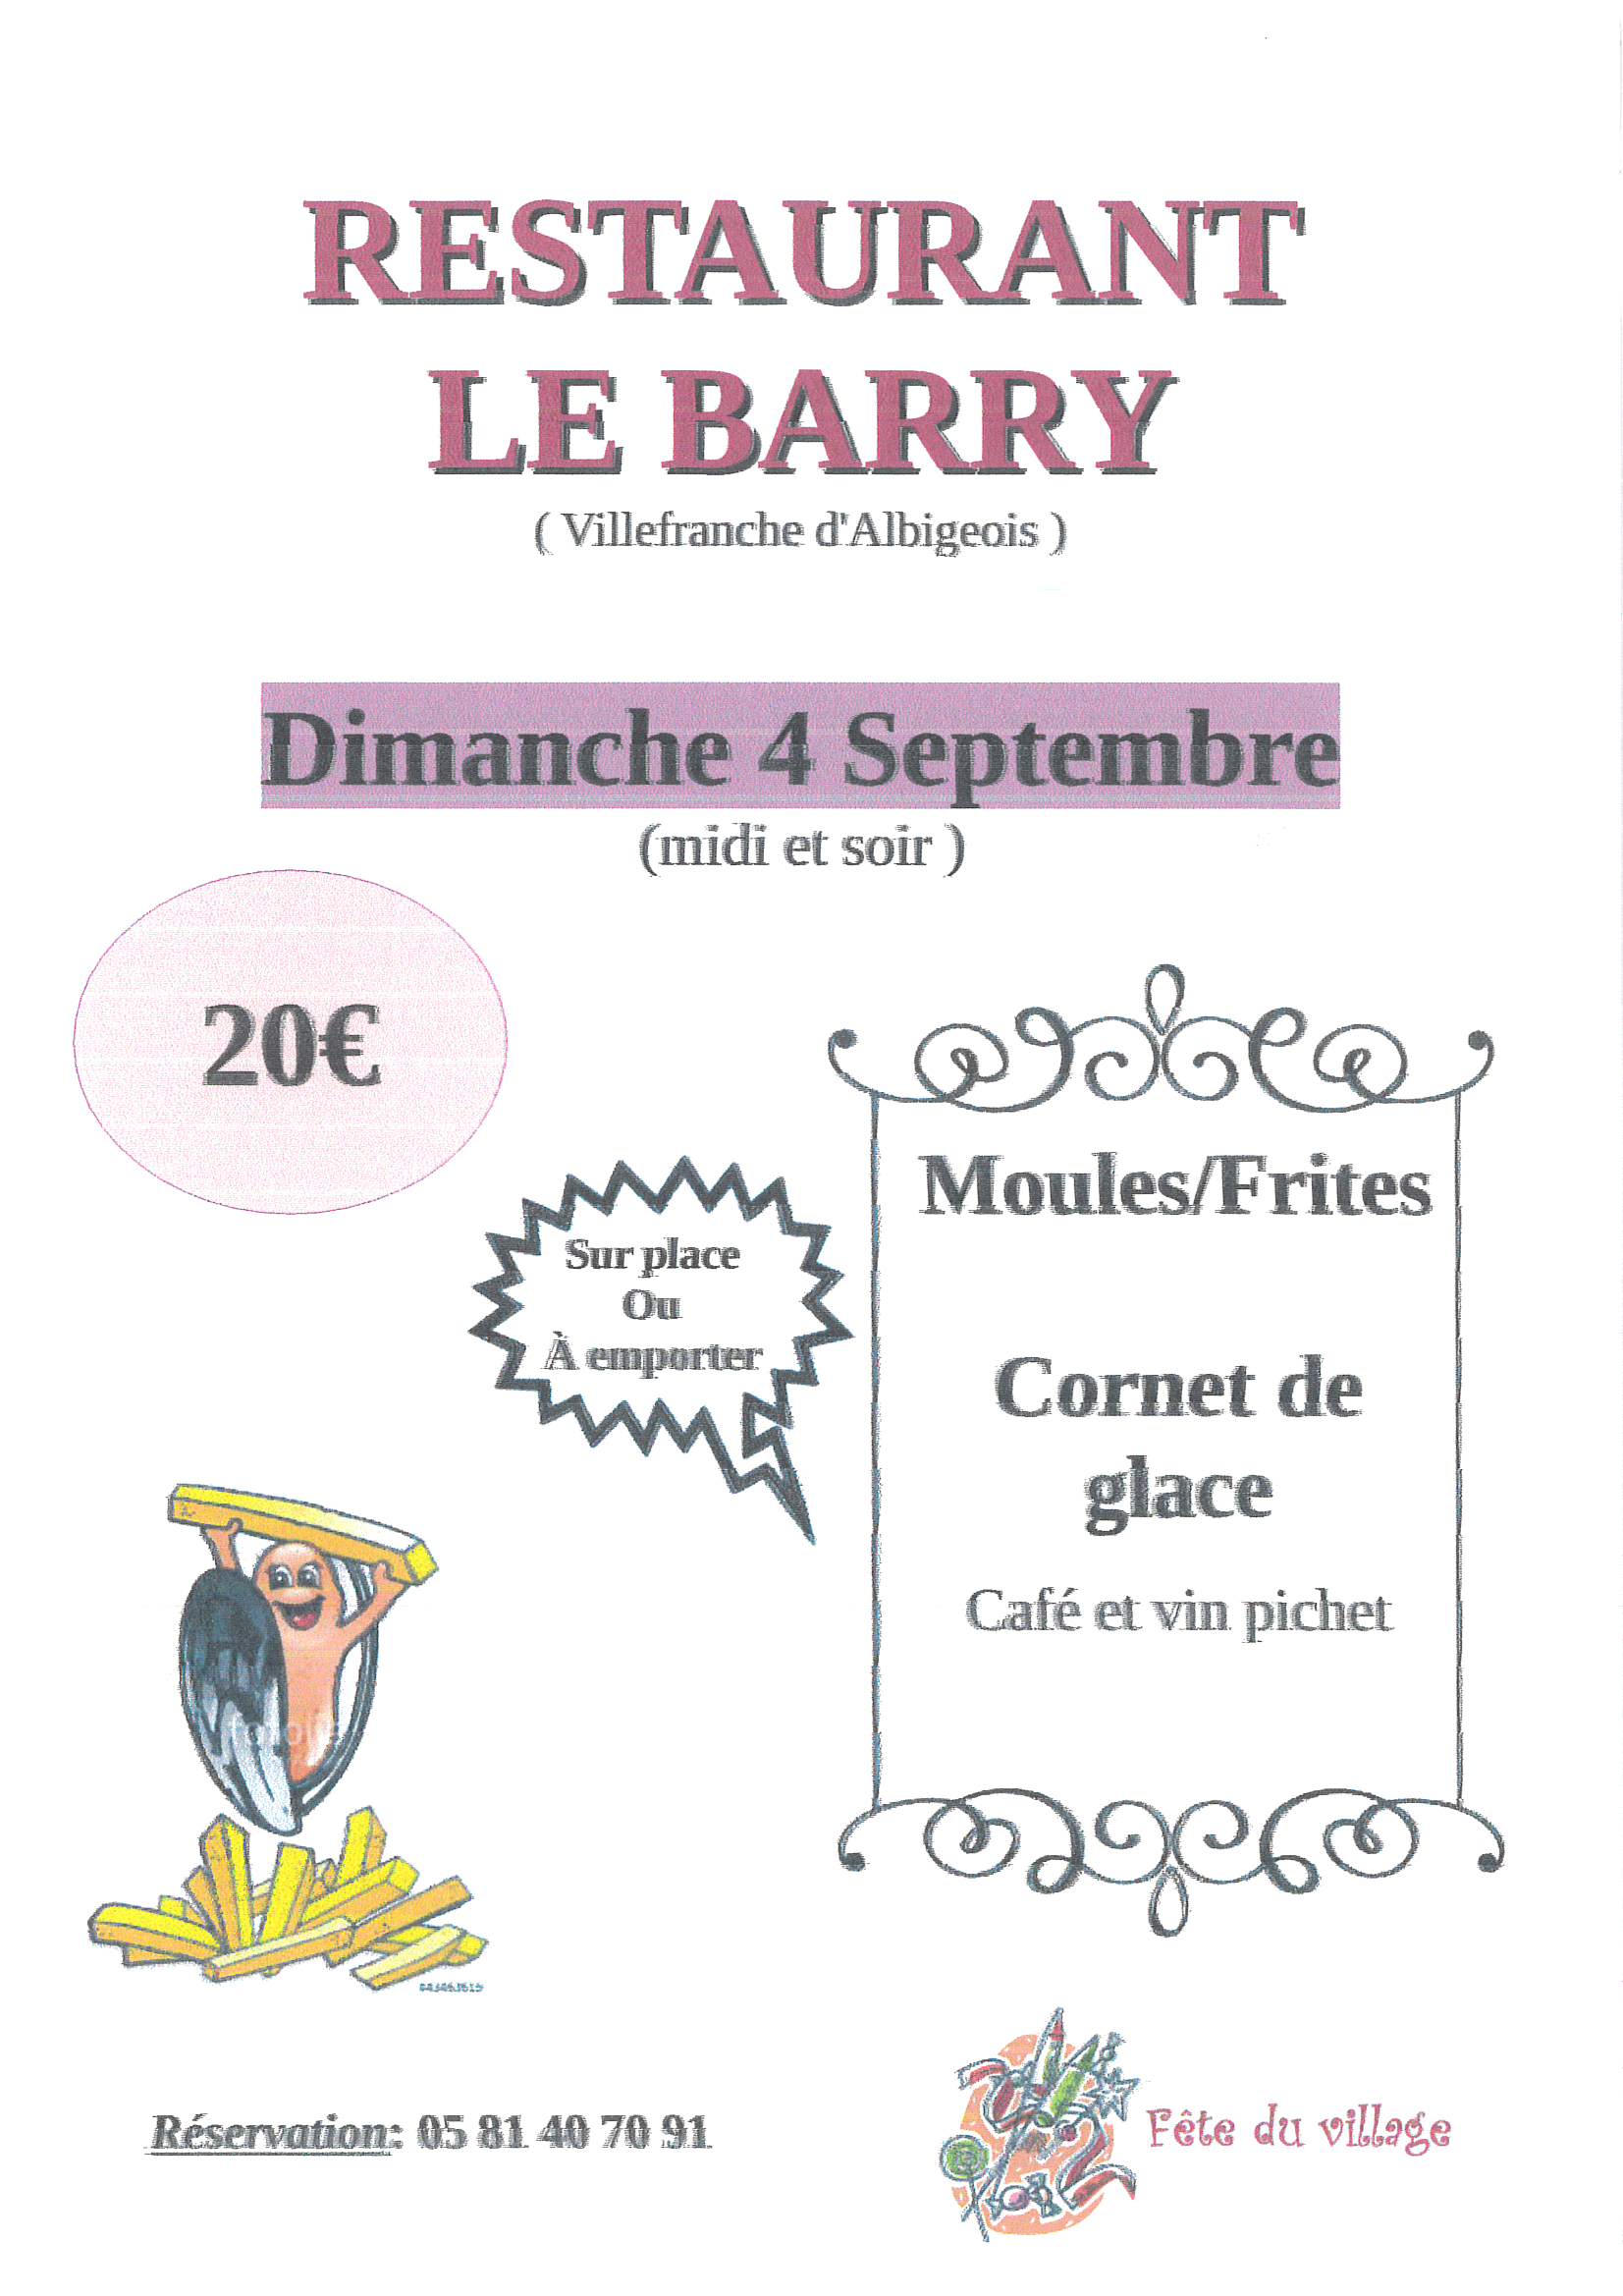 Restaurant Le Barry : moules / frites